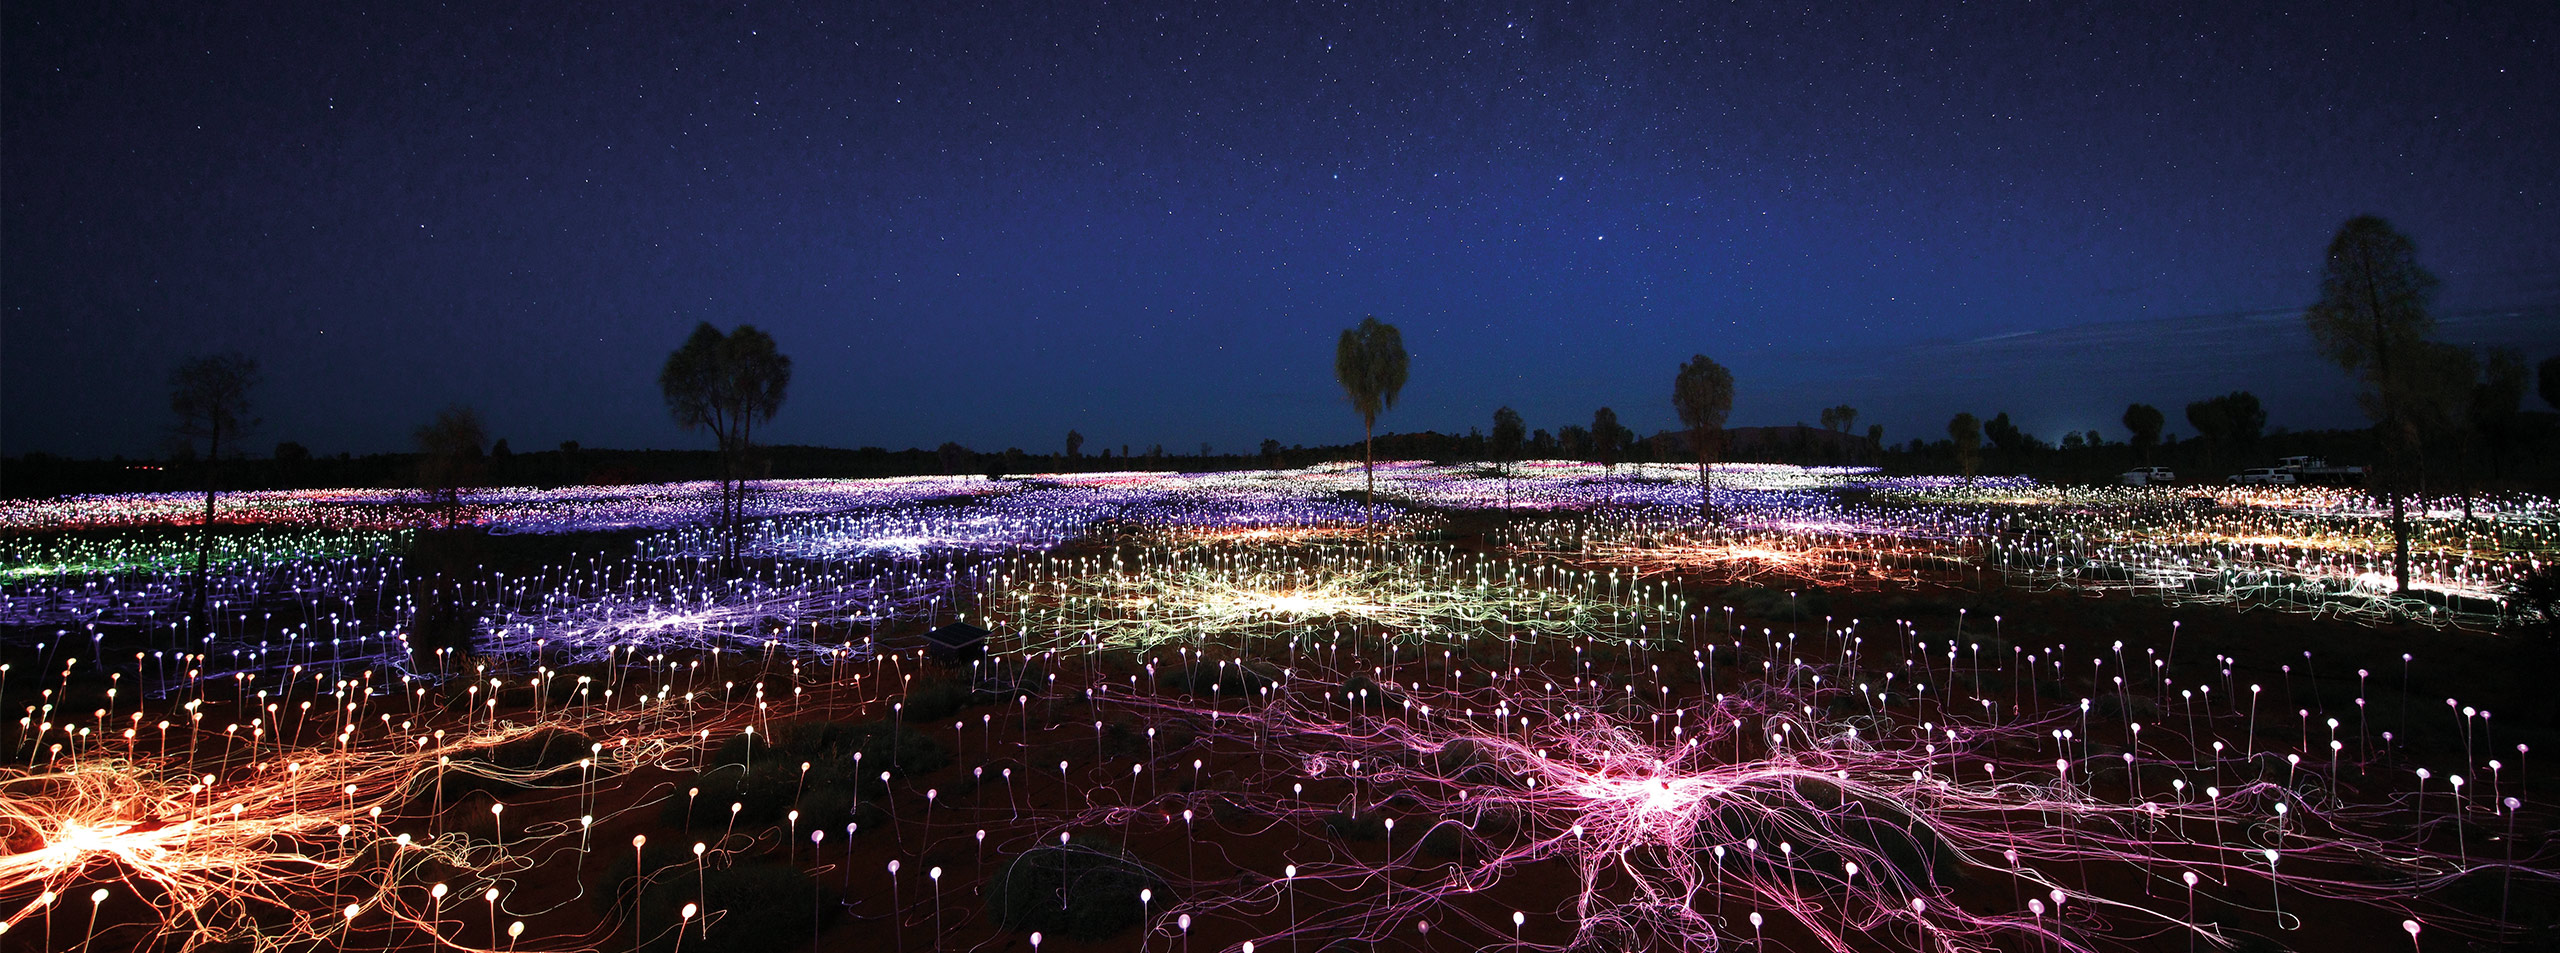 Field of Lights 